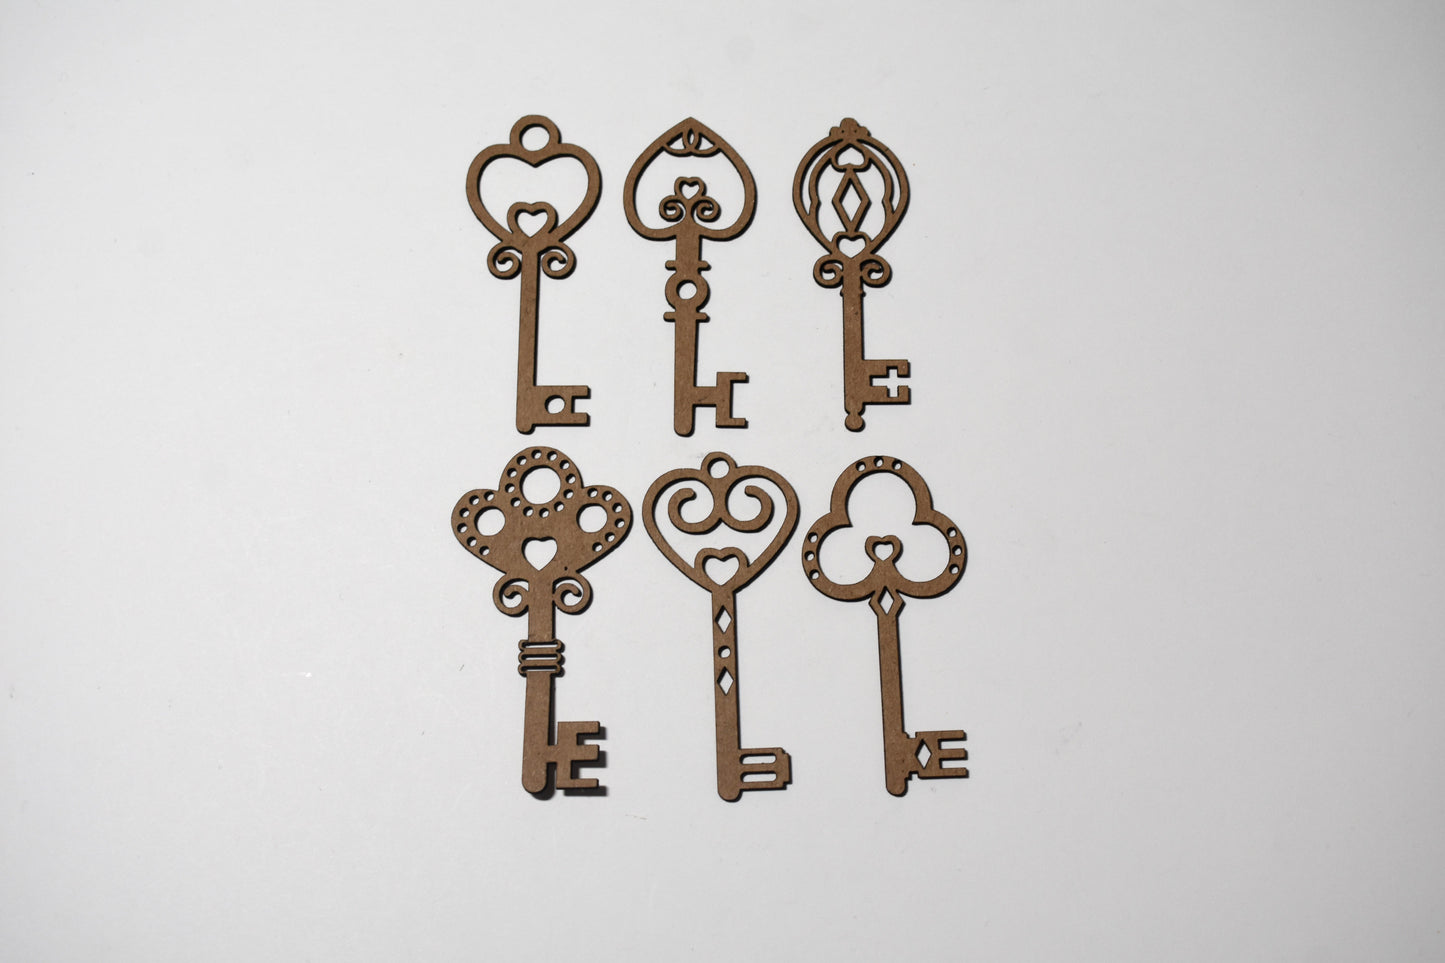 Decorative keys